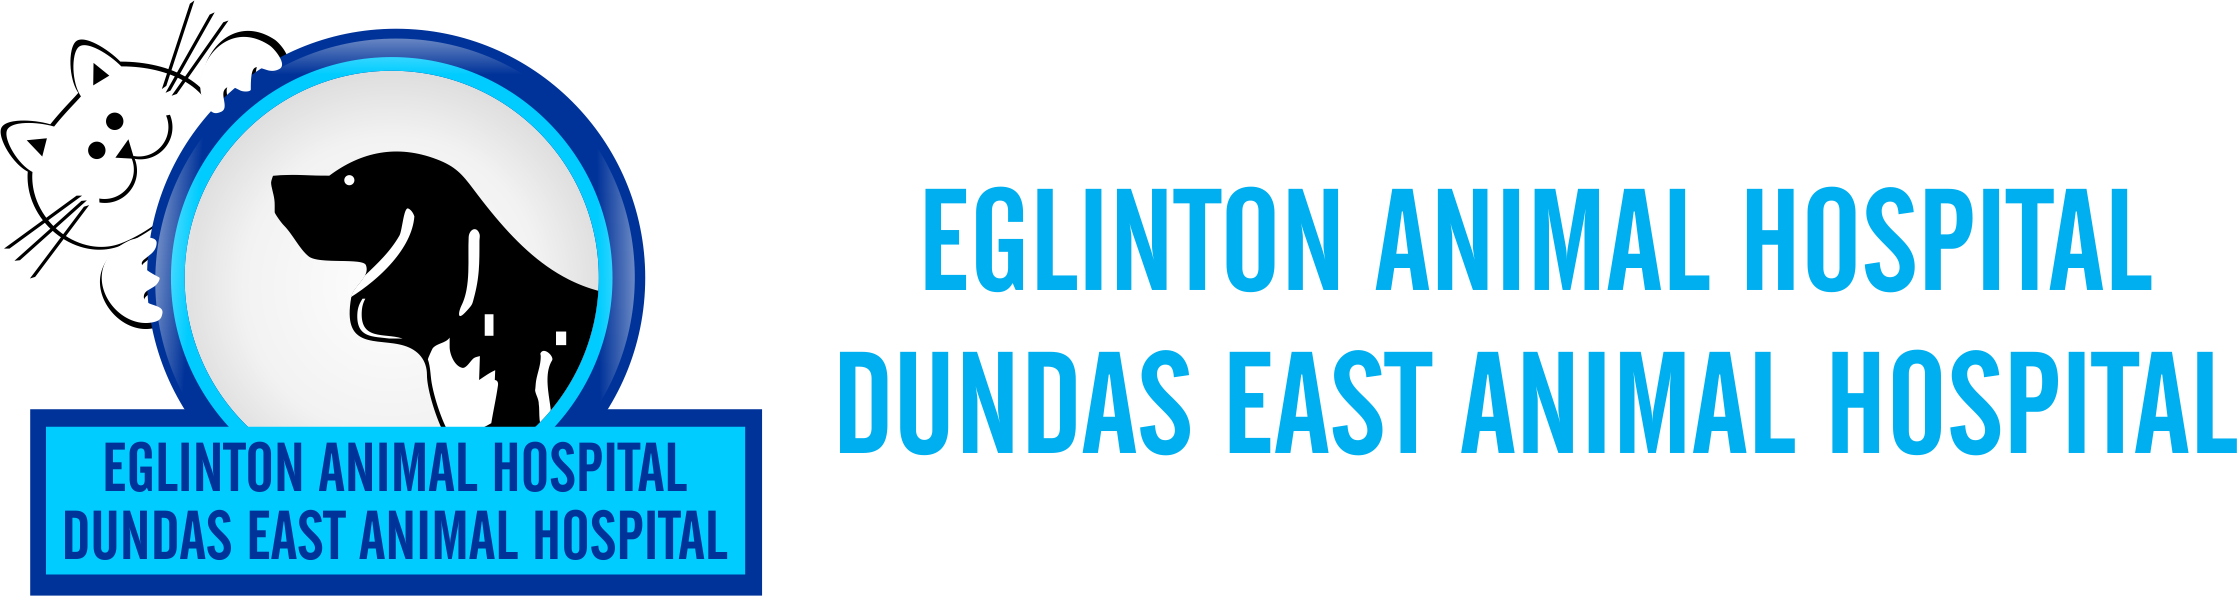 Eglinton Animal Hospital & Dundas East Animal Hospital